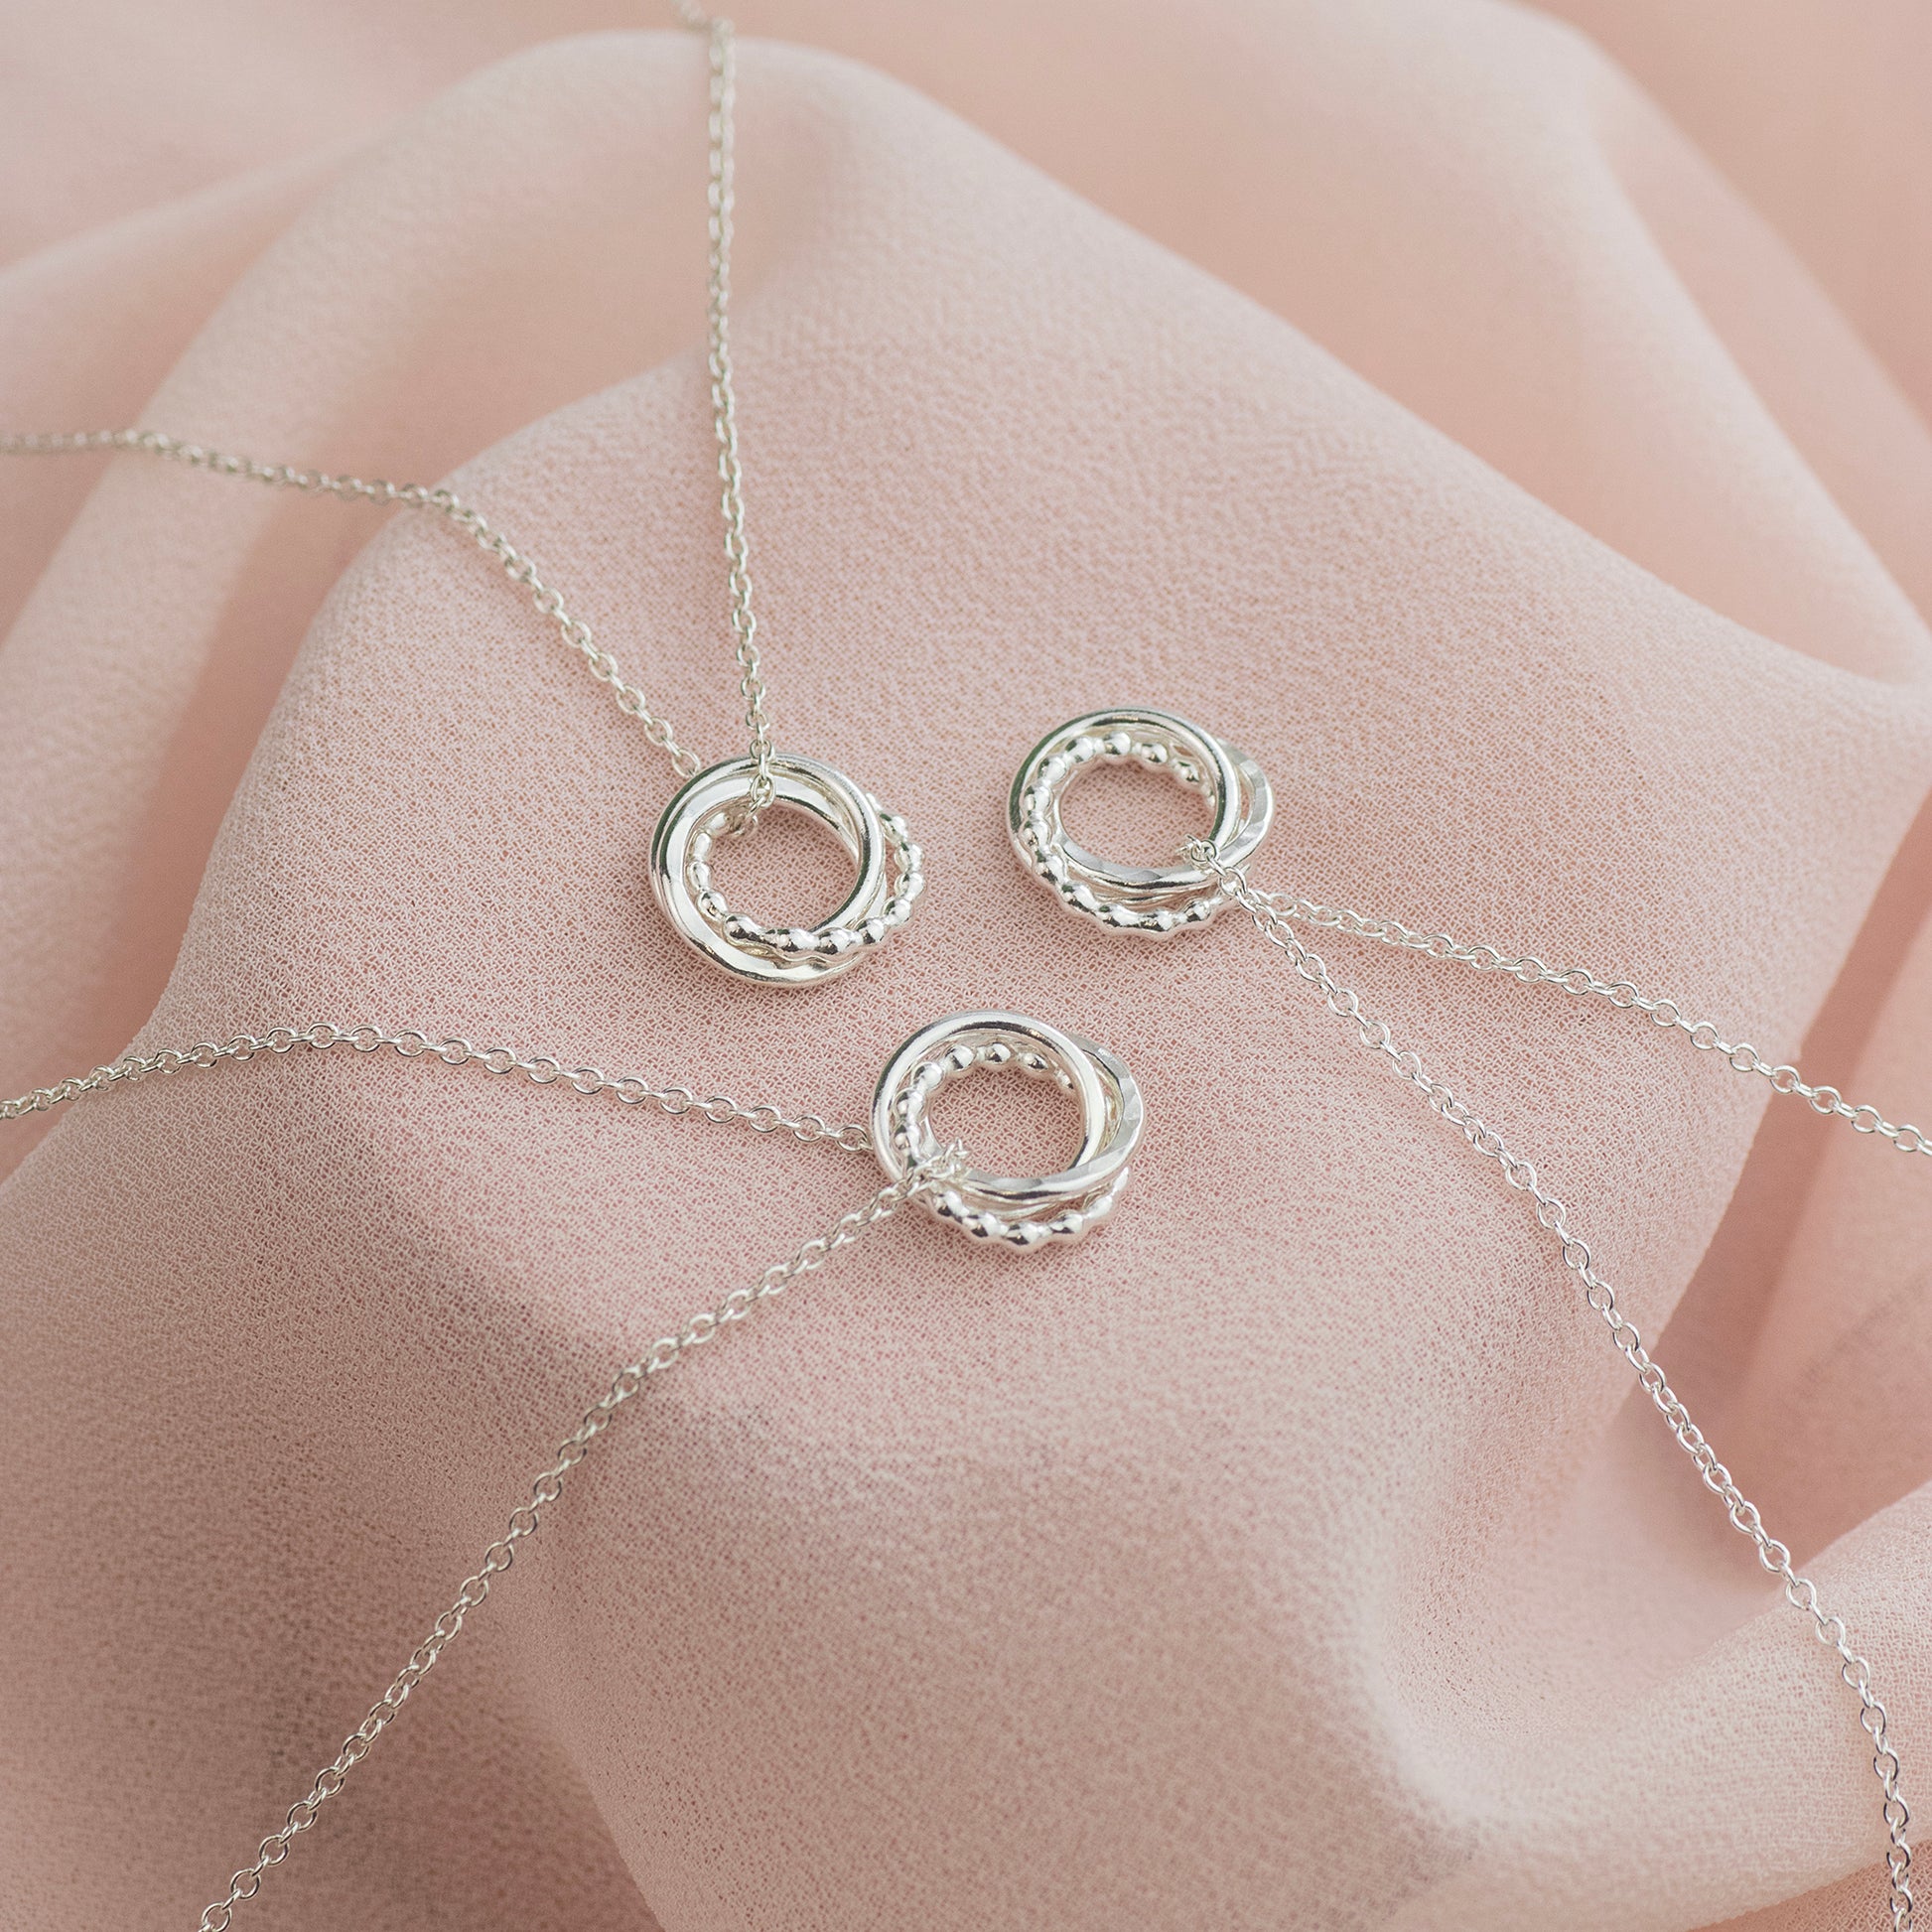 3 Cousins Necklaces Matching Set - Silver Love Knot Necklaces